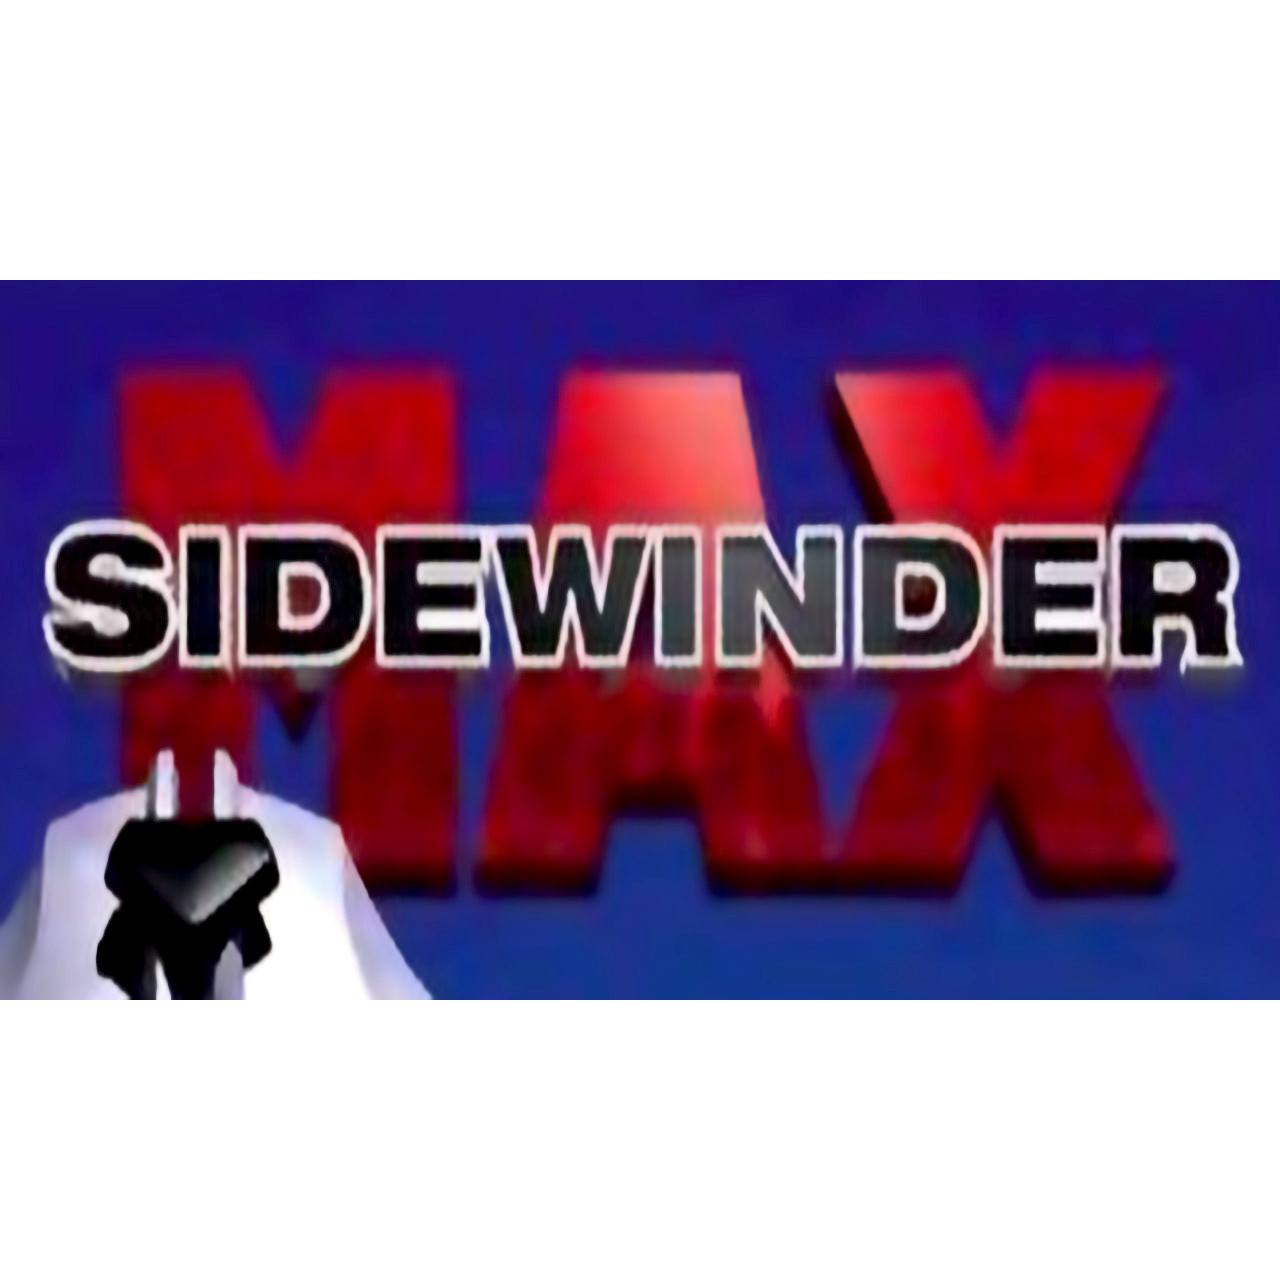 Sidewinder Max Import Sony PlayStation 2 Game